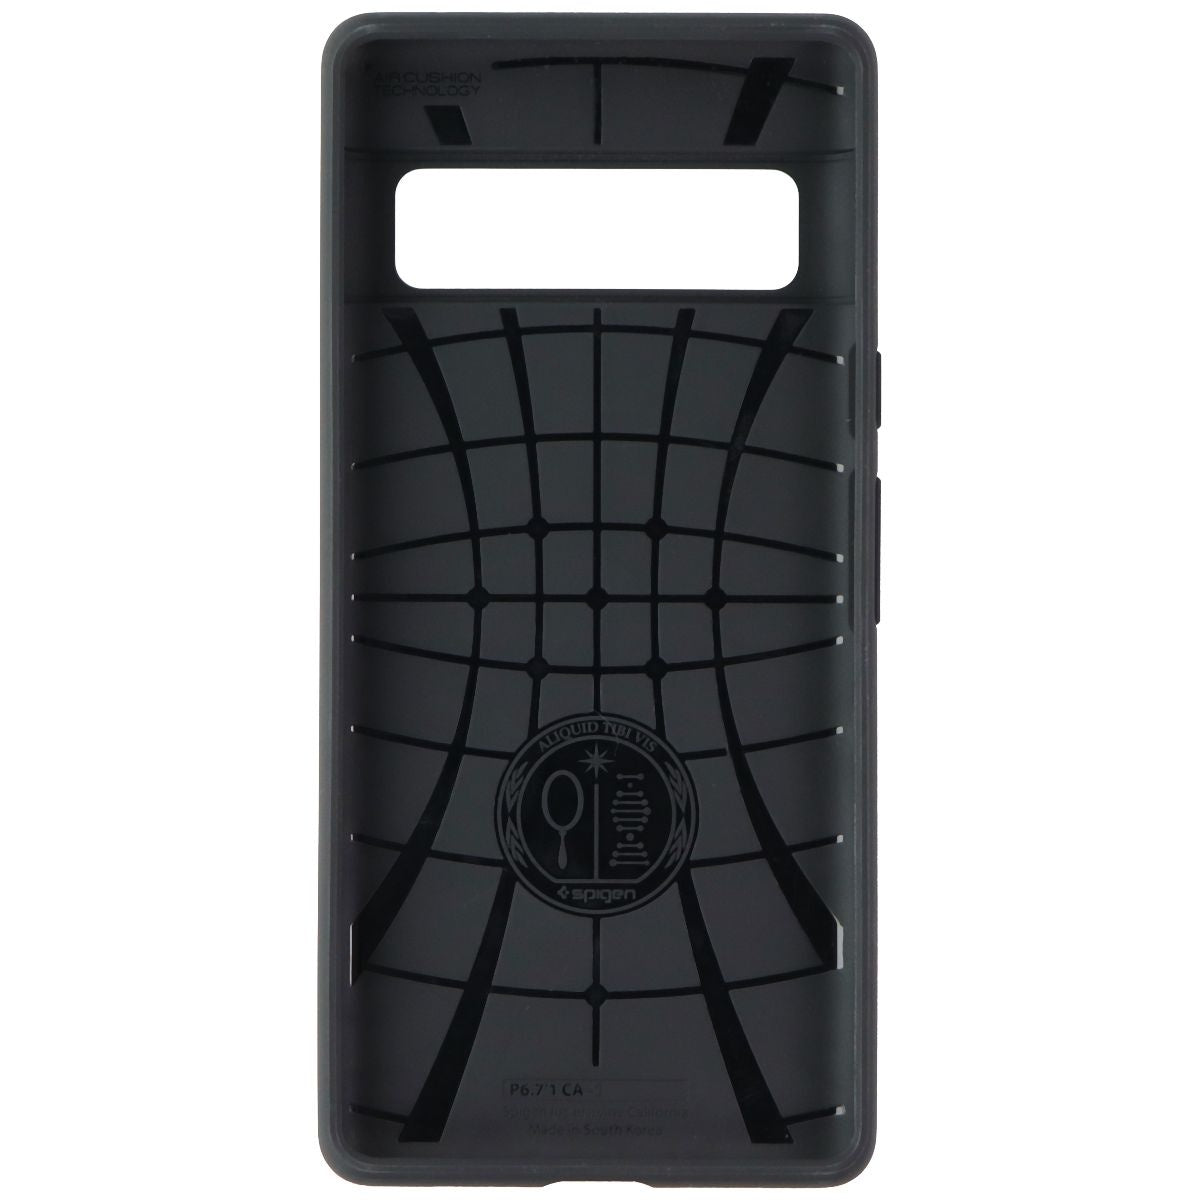 Spigen Core Armor Designed for Google Pixel 6 Pro Case (2021) - Matte Black Cell Phone - Cases, Covers & Skins Spigen    - Simple Cell Bulk Wholesale Pricing - USA Seller